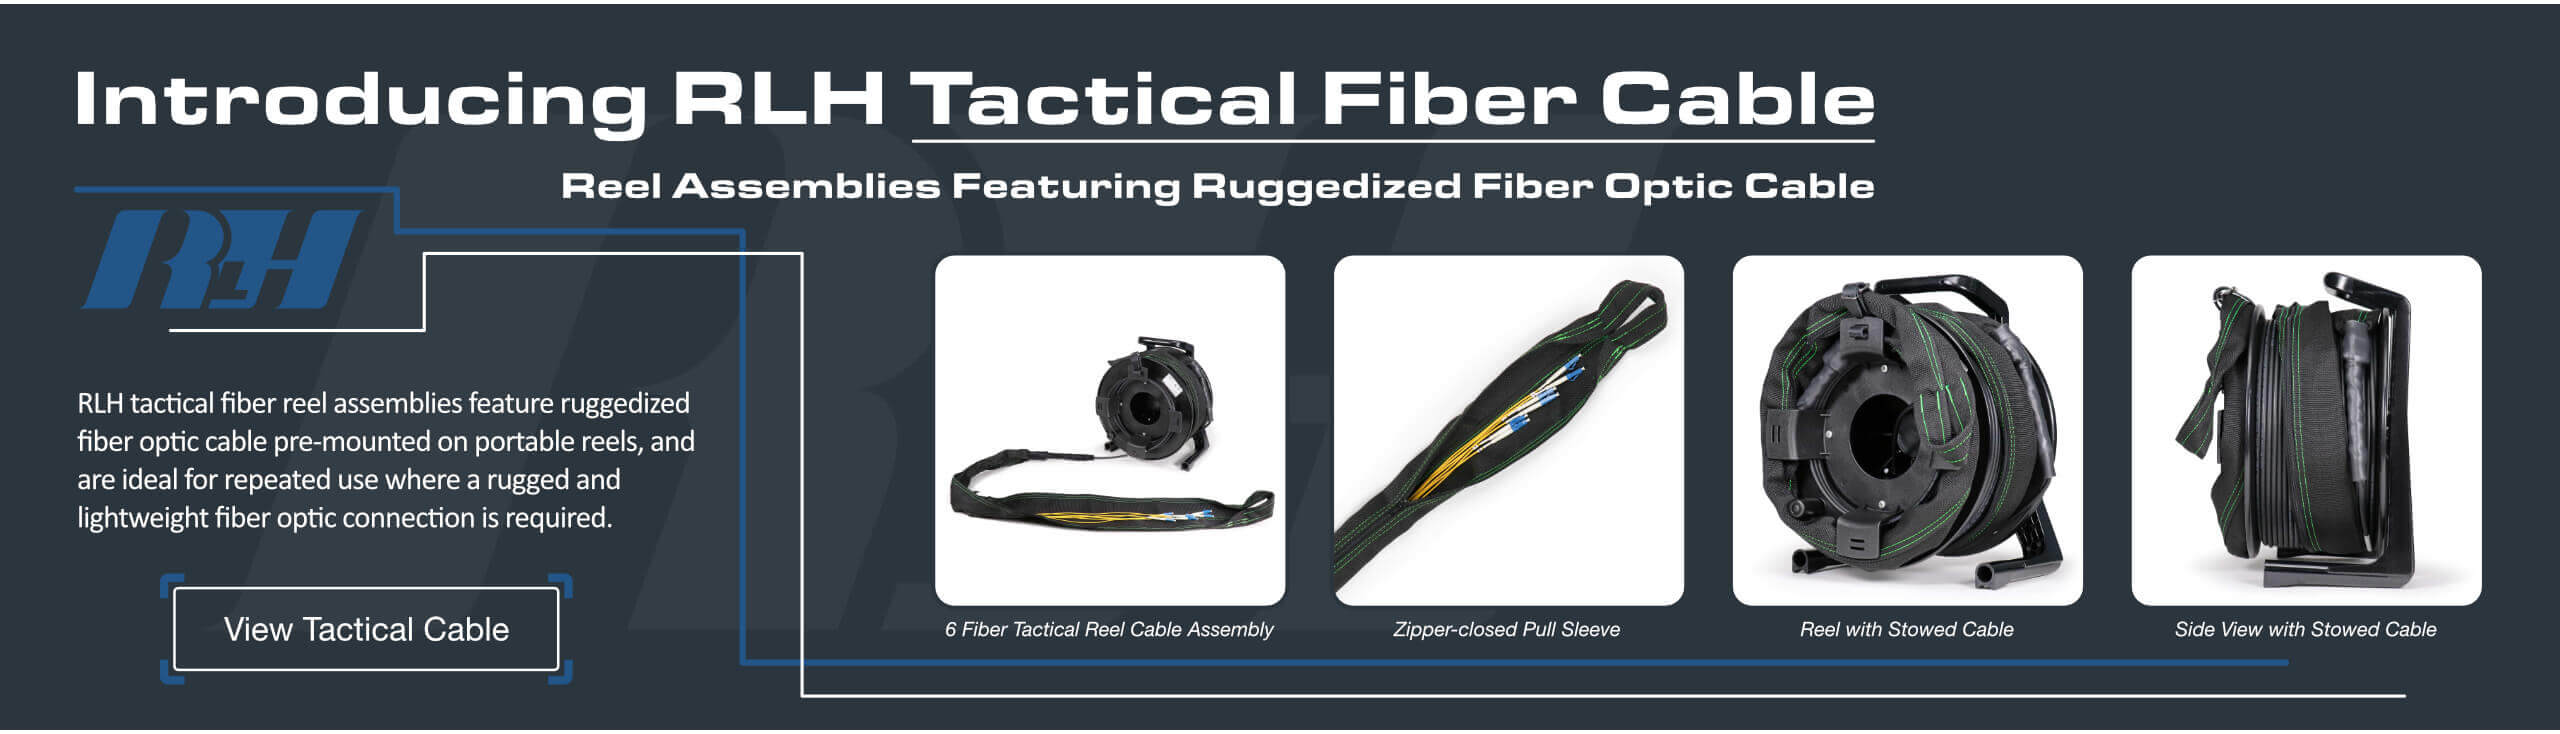 Introducing RLH Tactical Fiber Cable